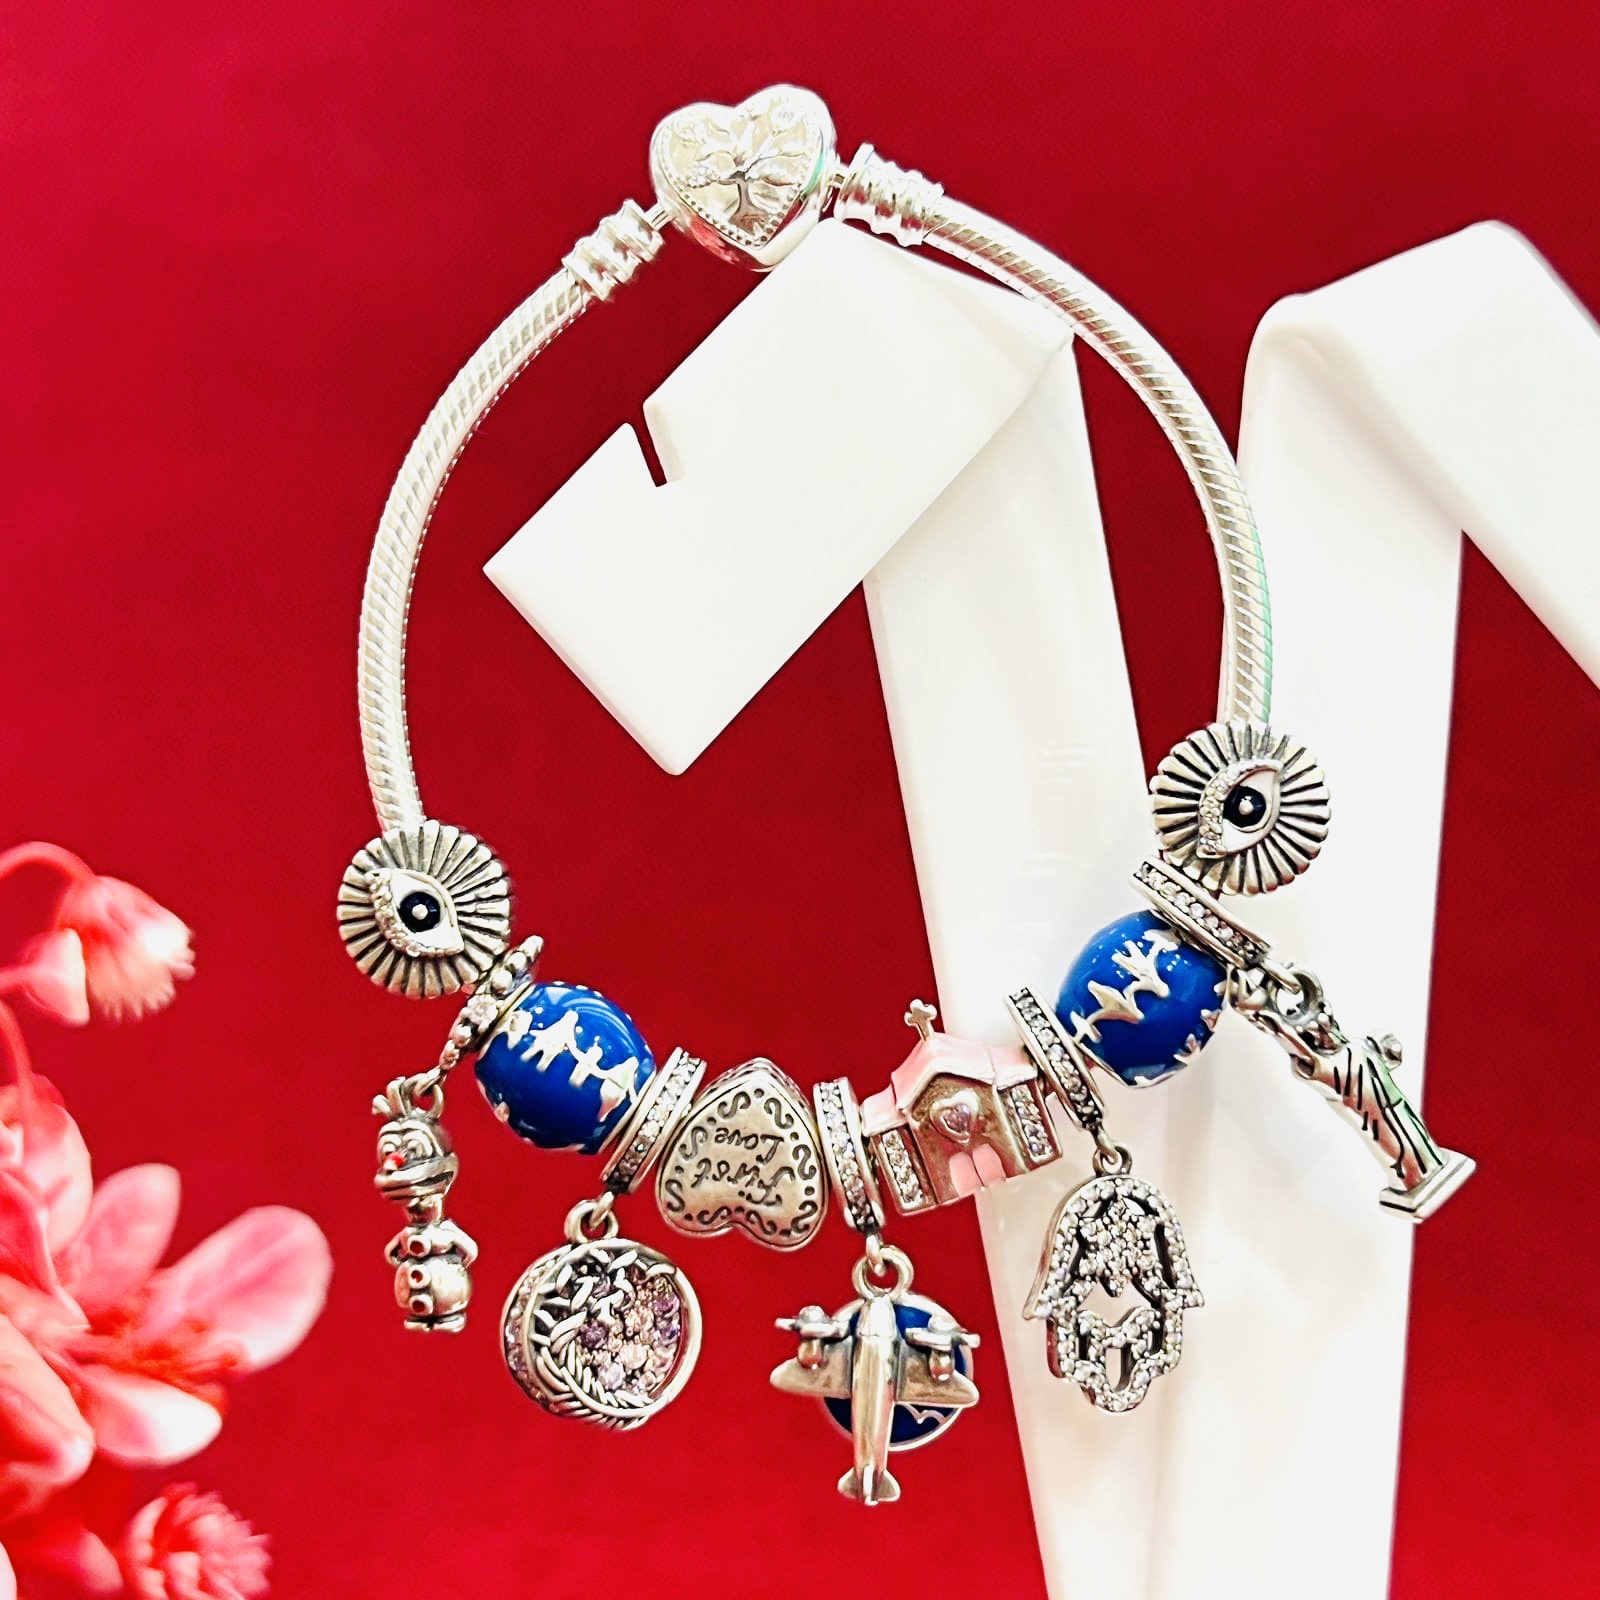 What Makes Pandora Bracelets Special?